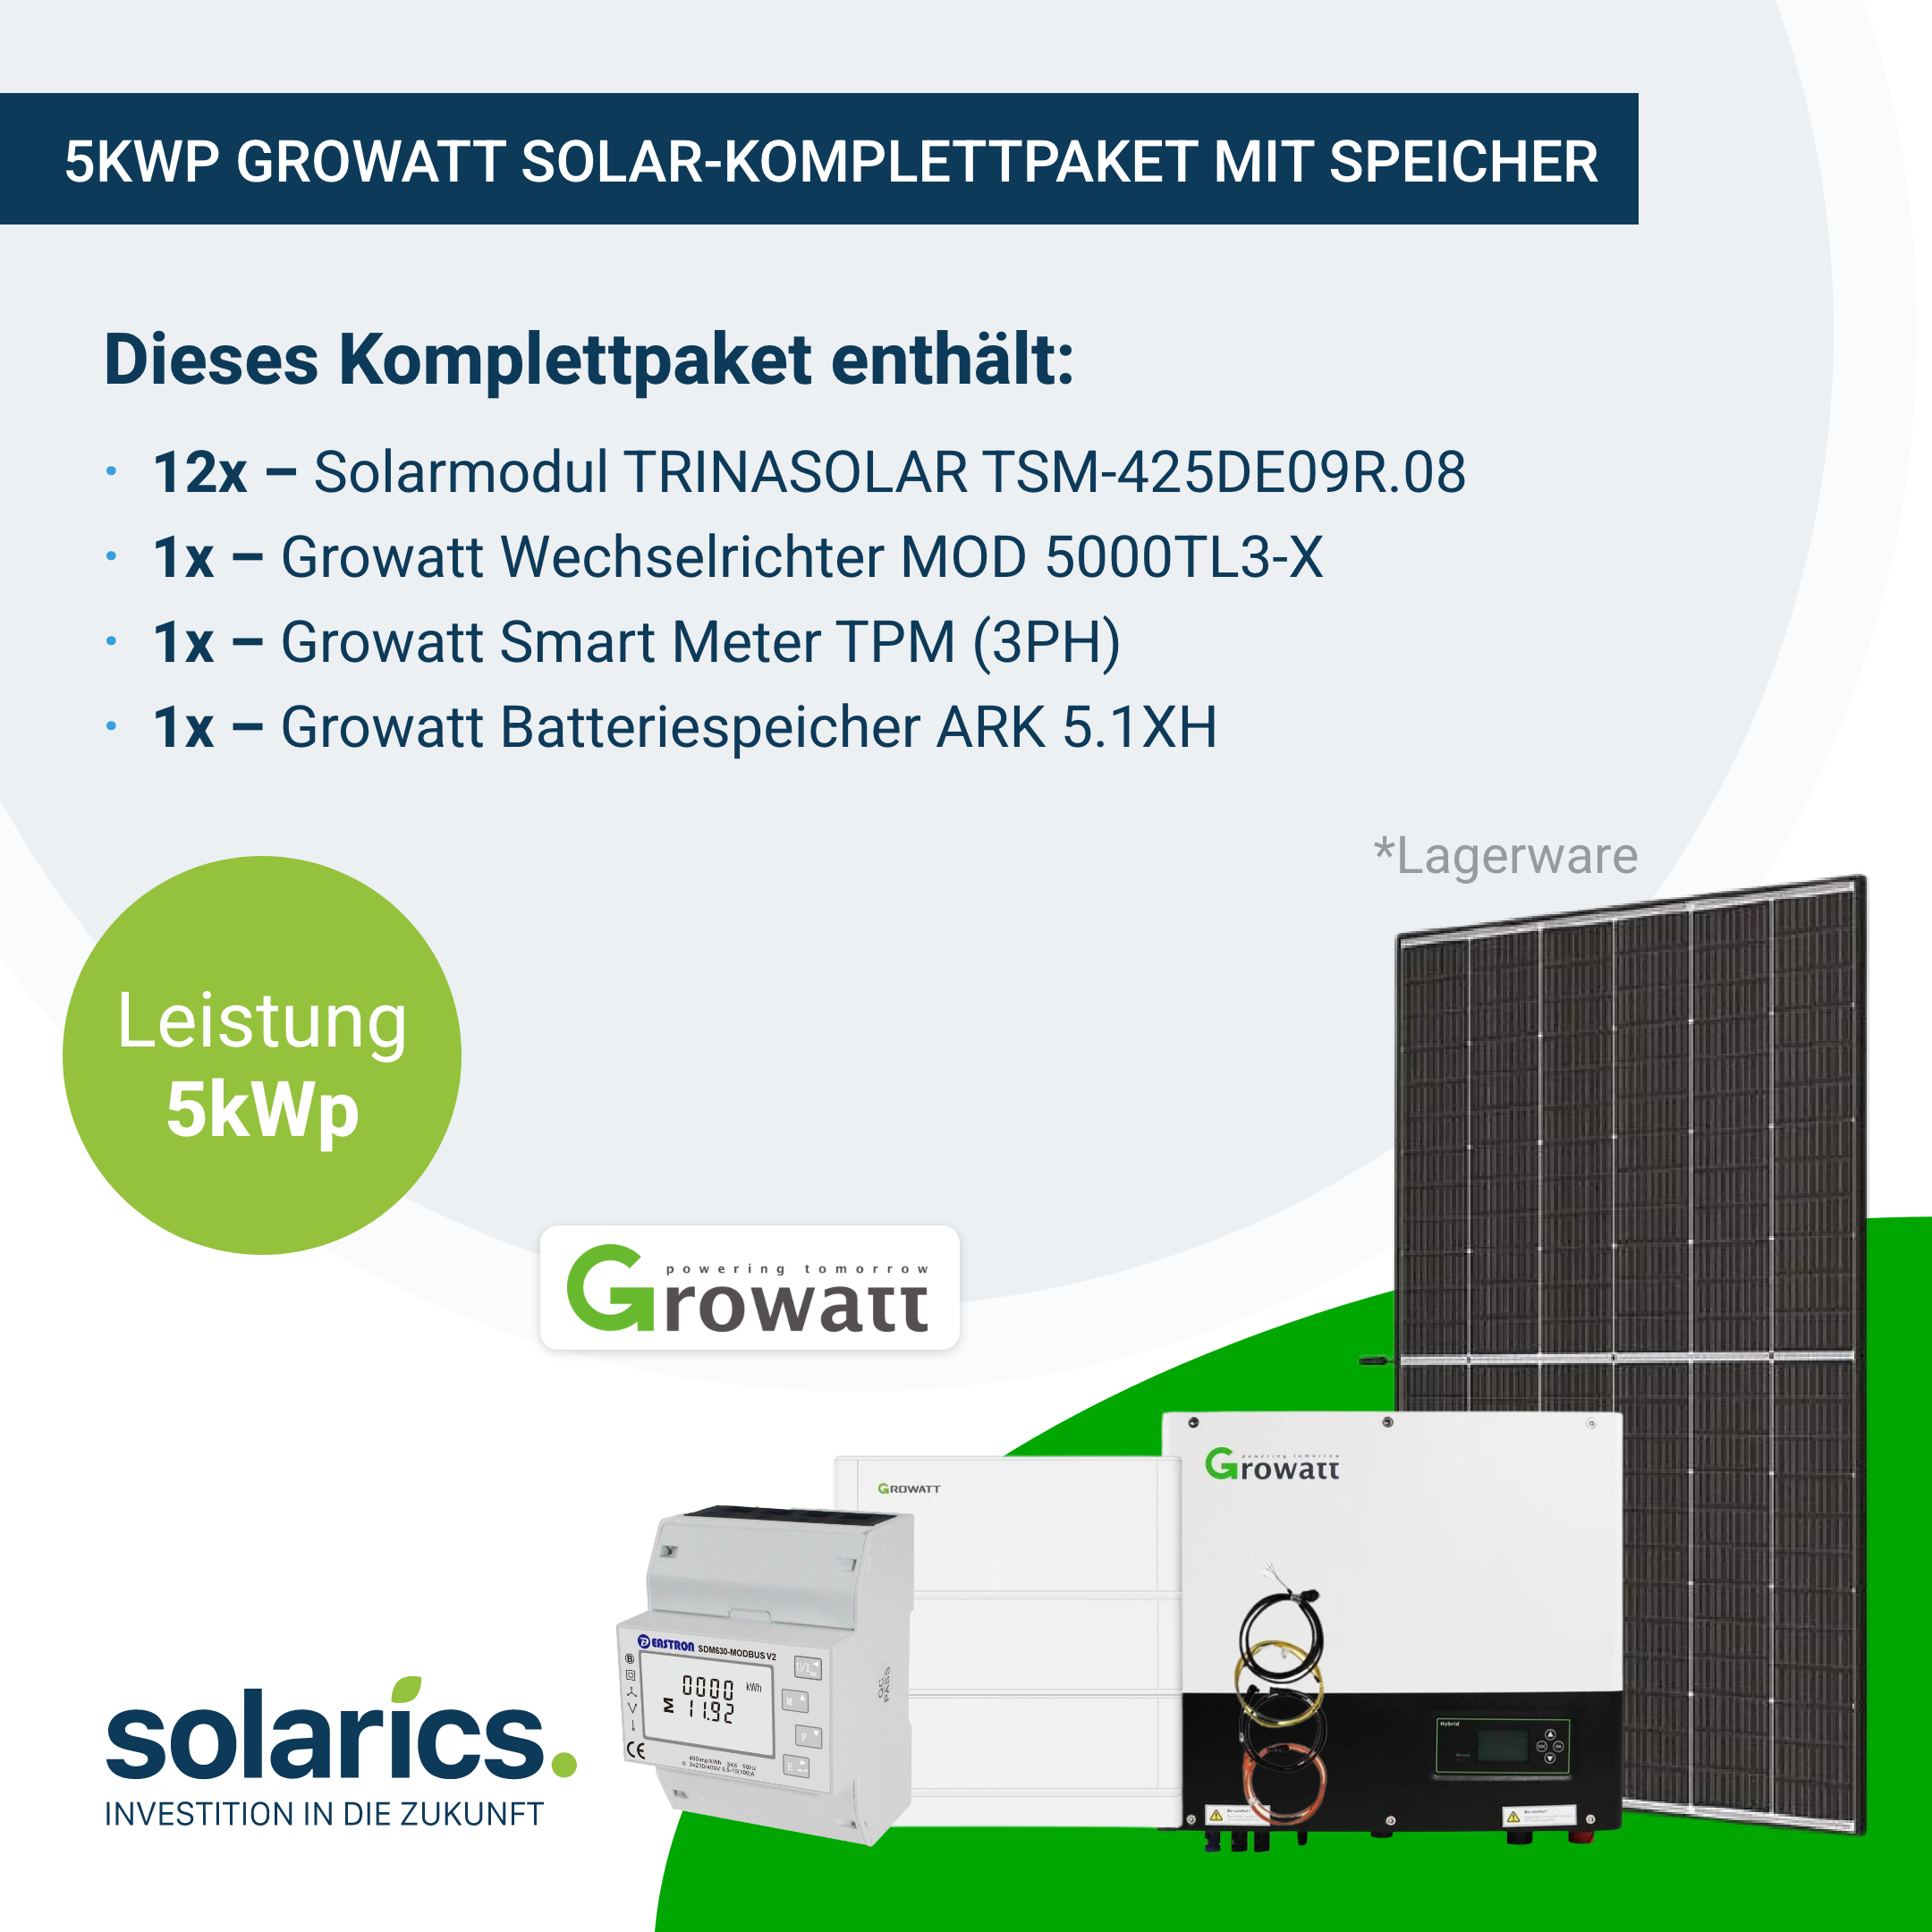 5kWp Fronius Solar-Komplettpaket mit Speicher – Solarics GmbH